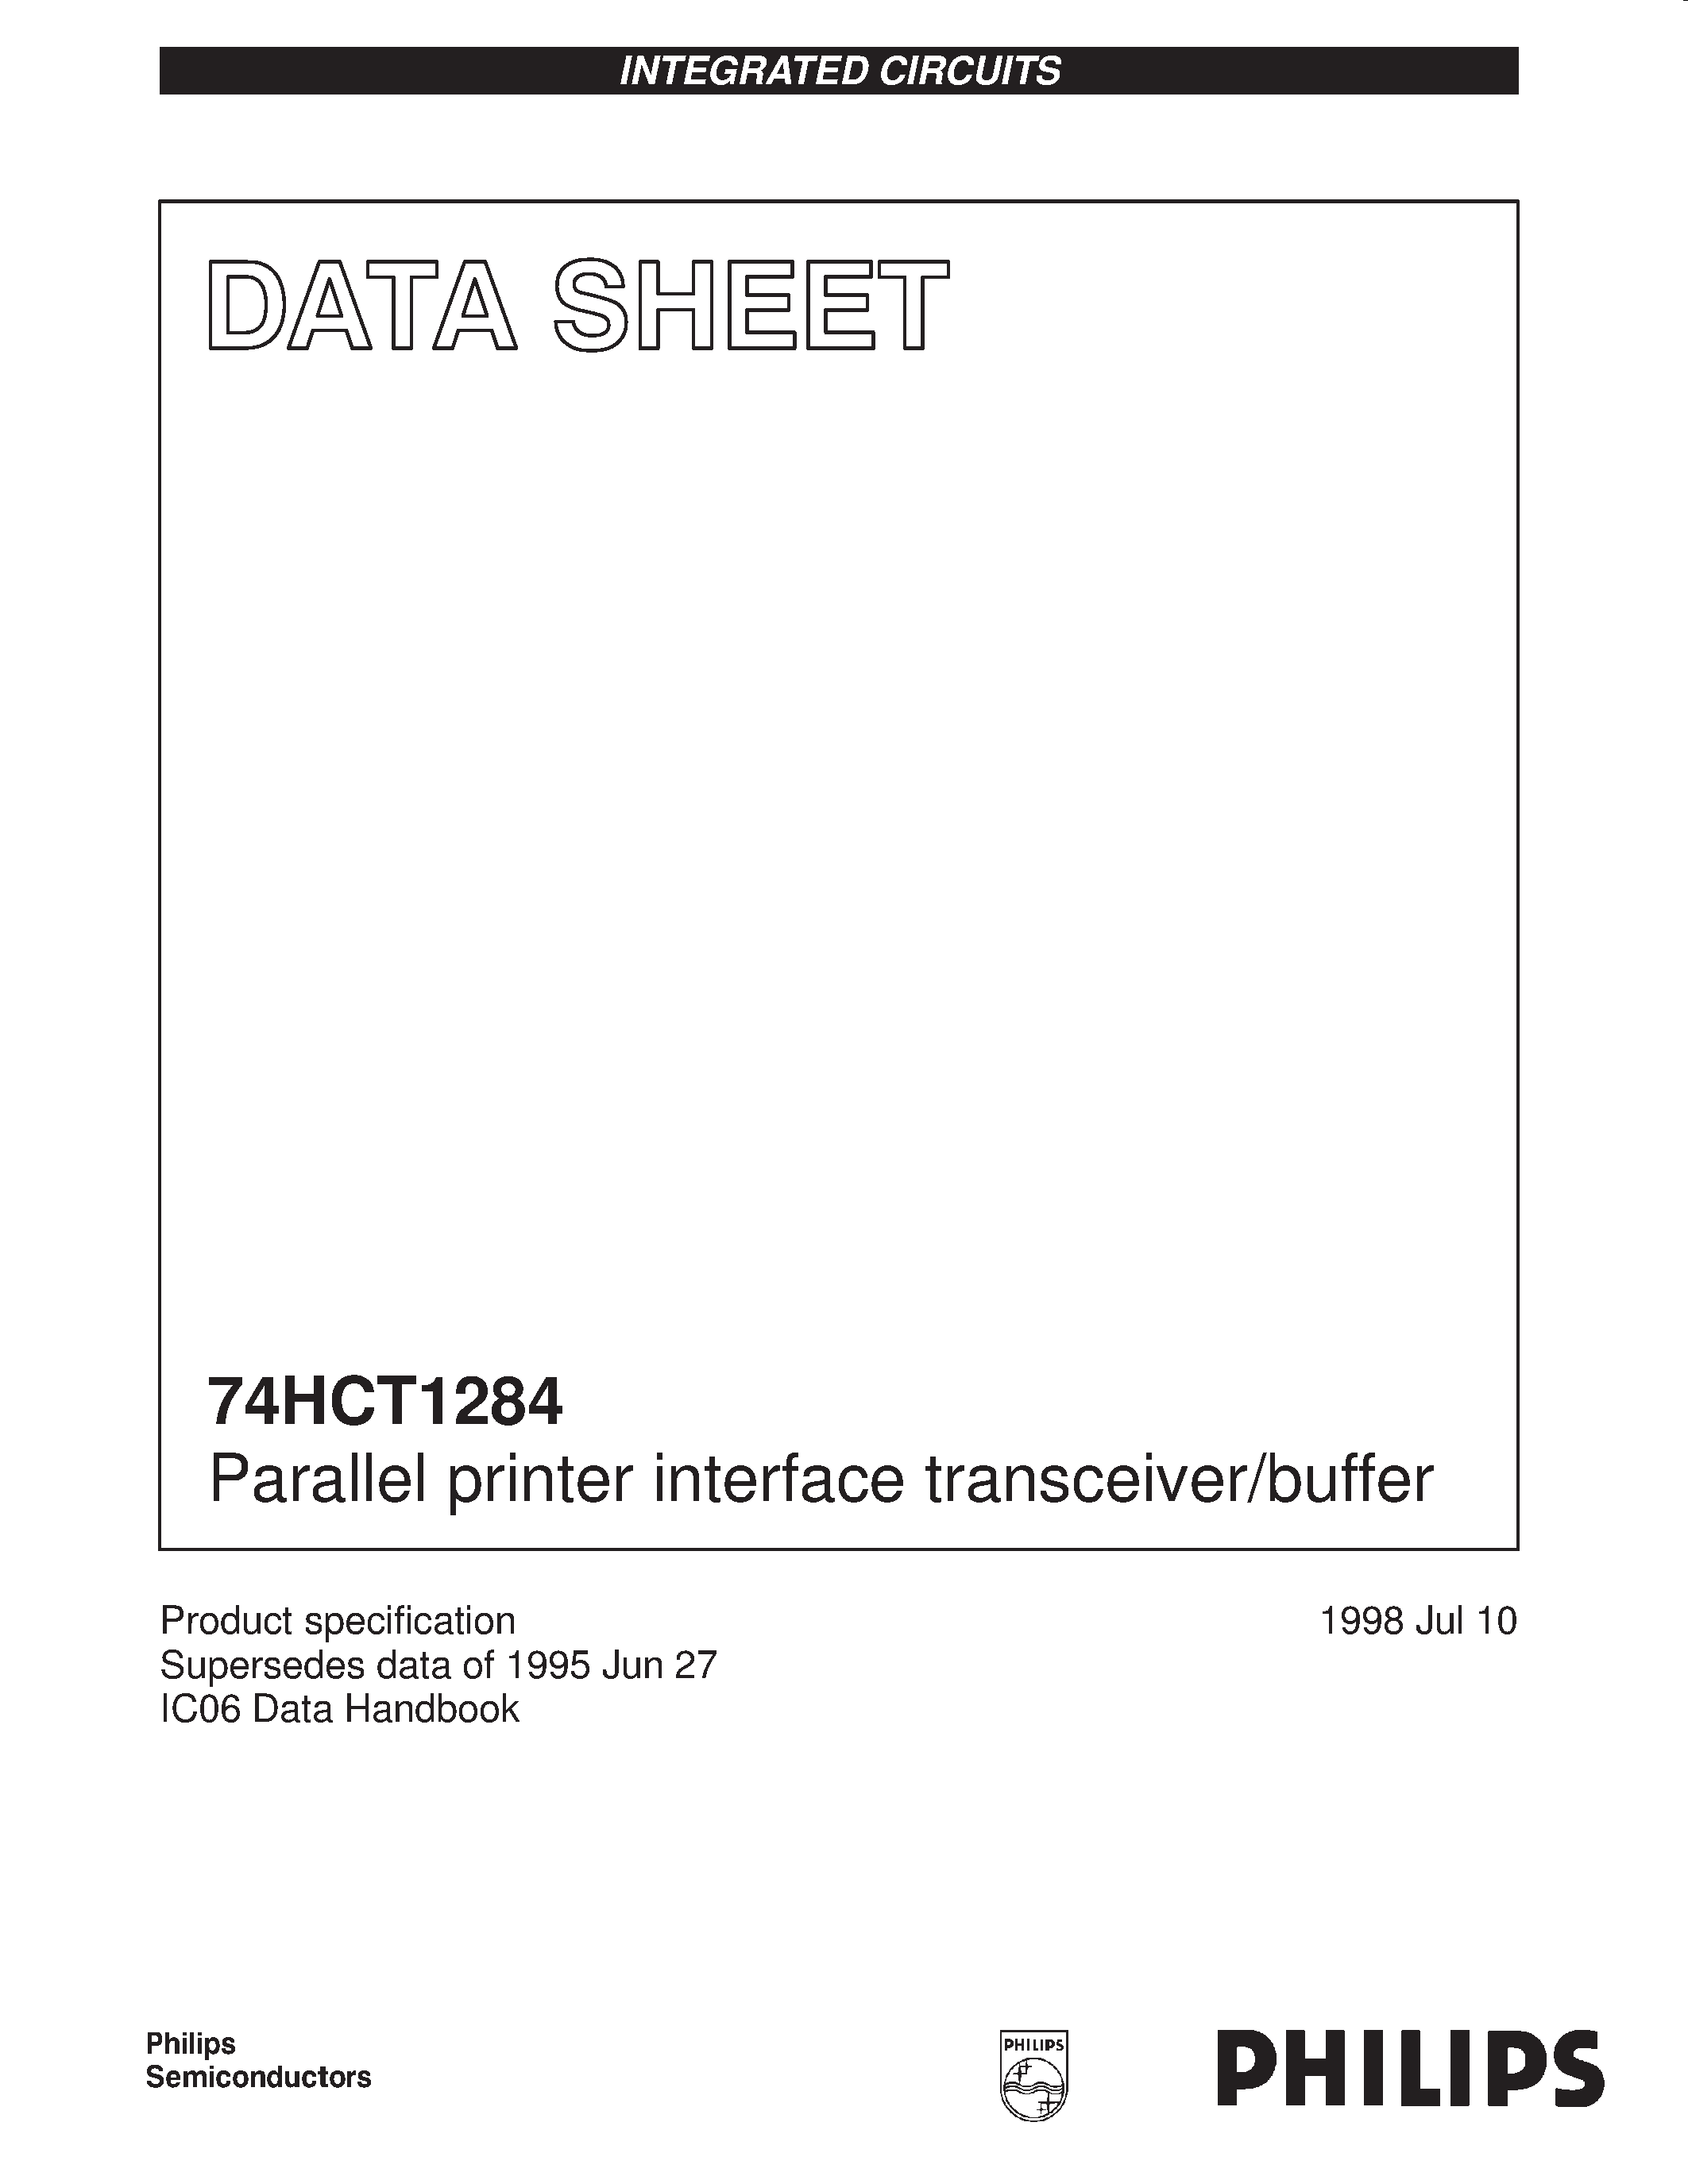 Даташит 74HCT1284 - Parallel printer interface transceiver/buffer страница 1